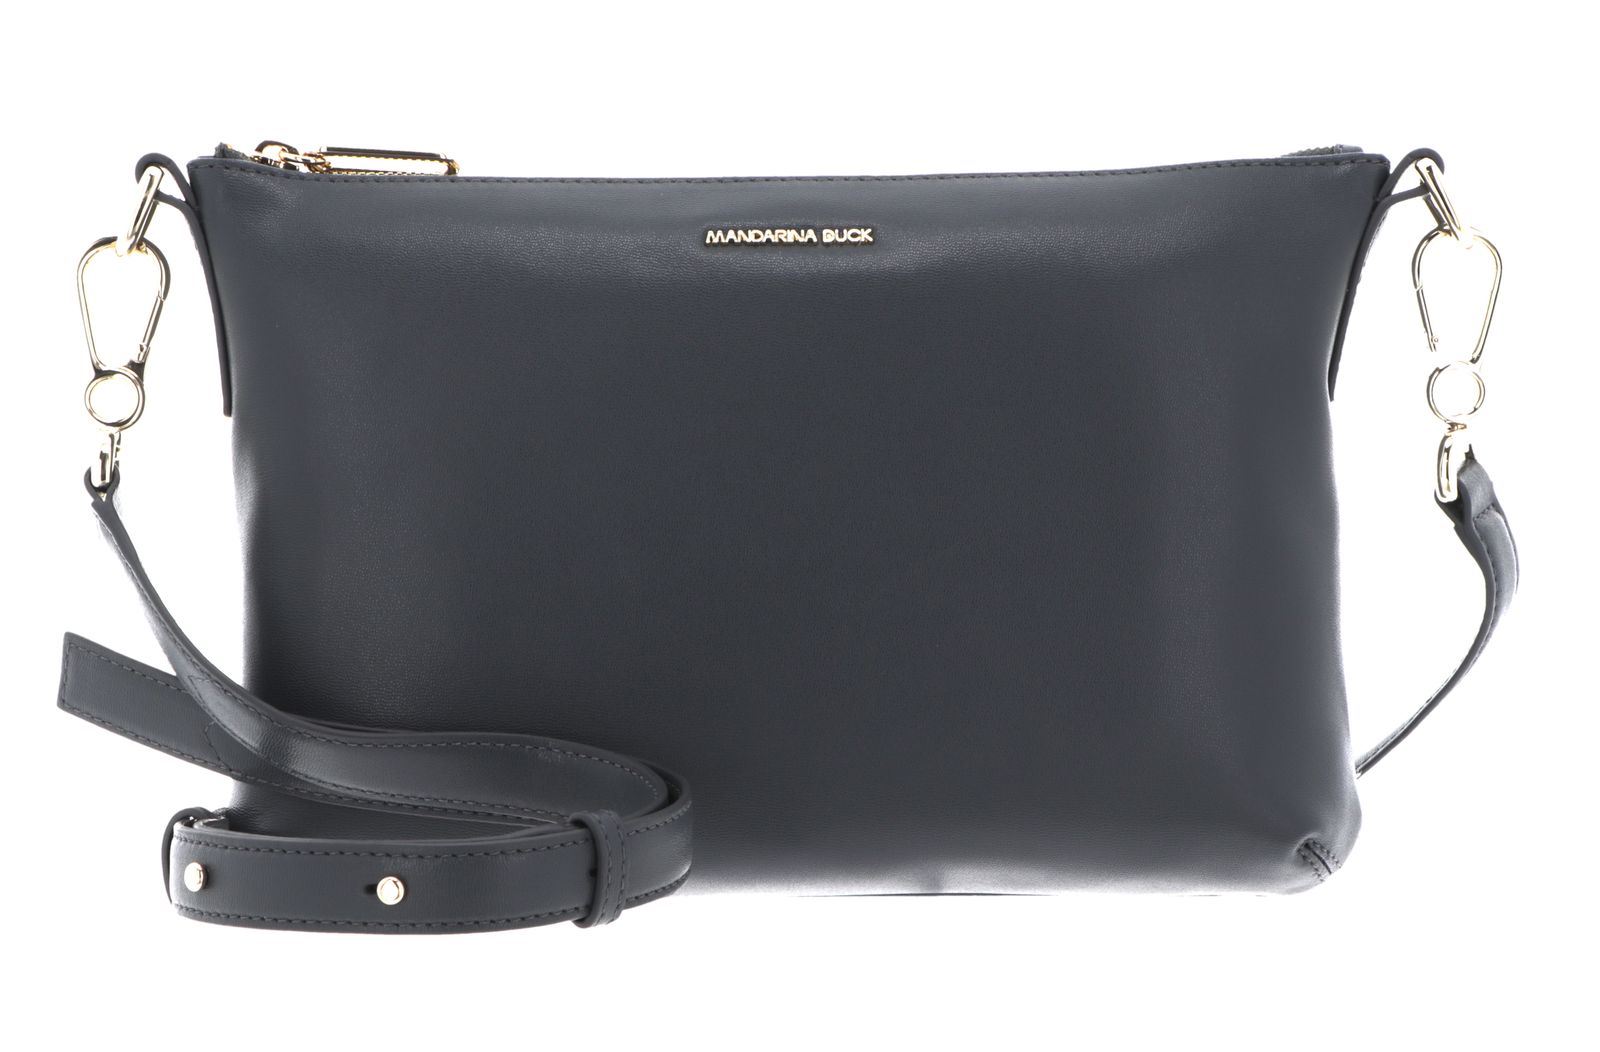 MANDARINA DUCK Luna Pochette Iron Gate | Buy bags, purses & accessories ...